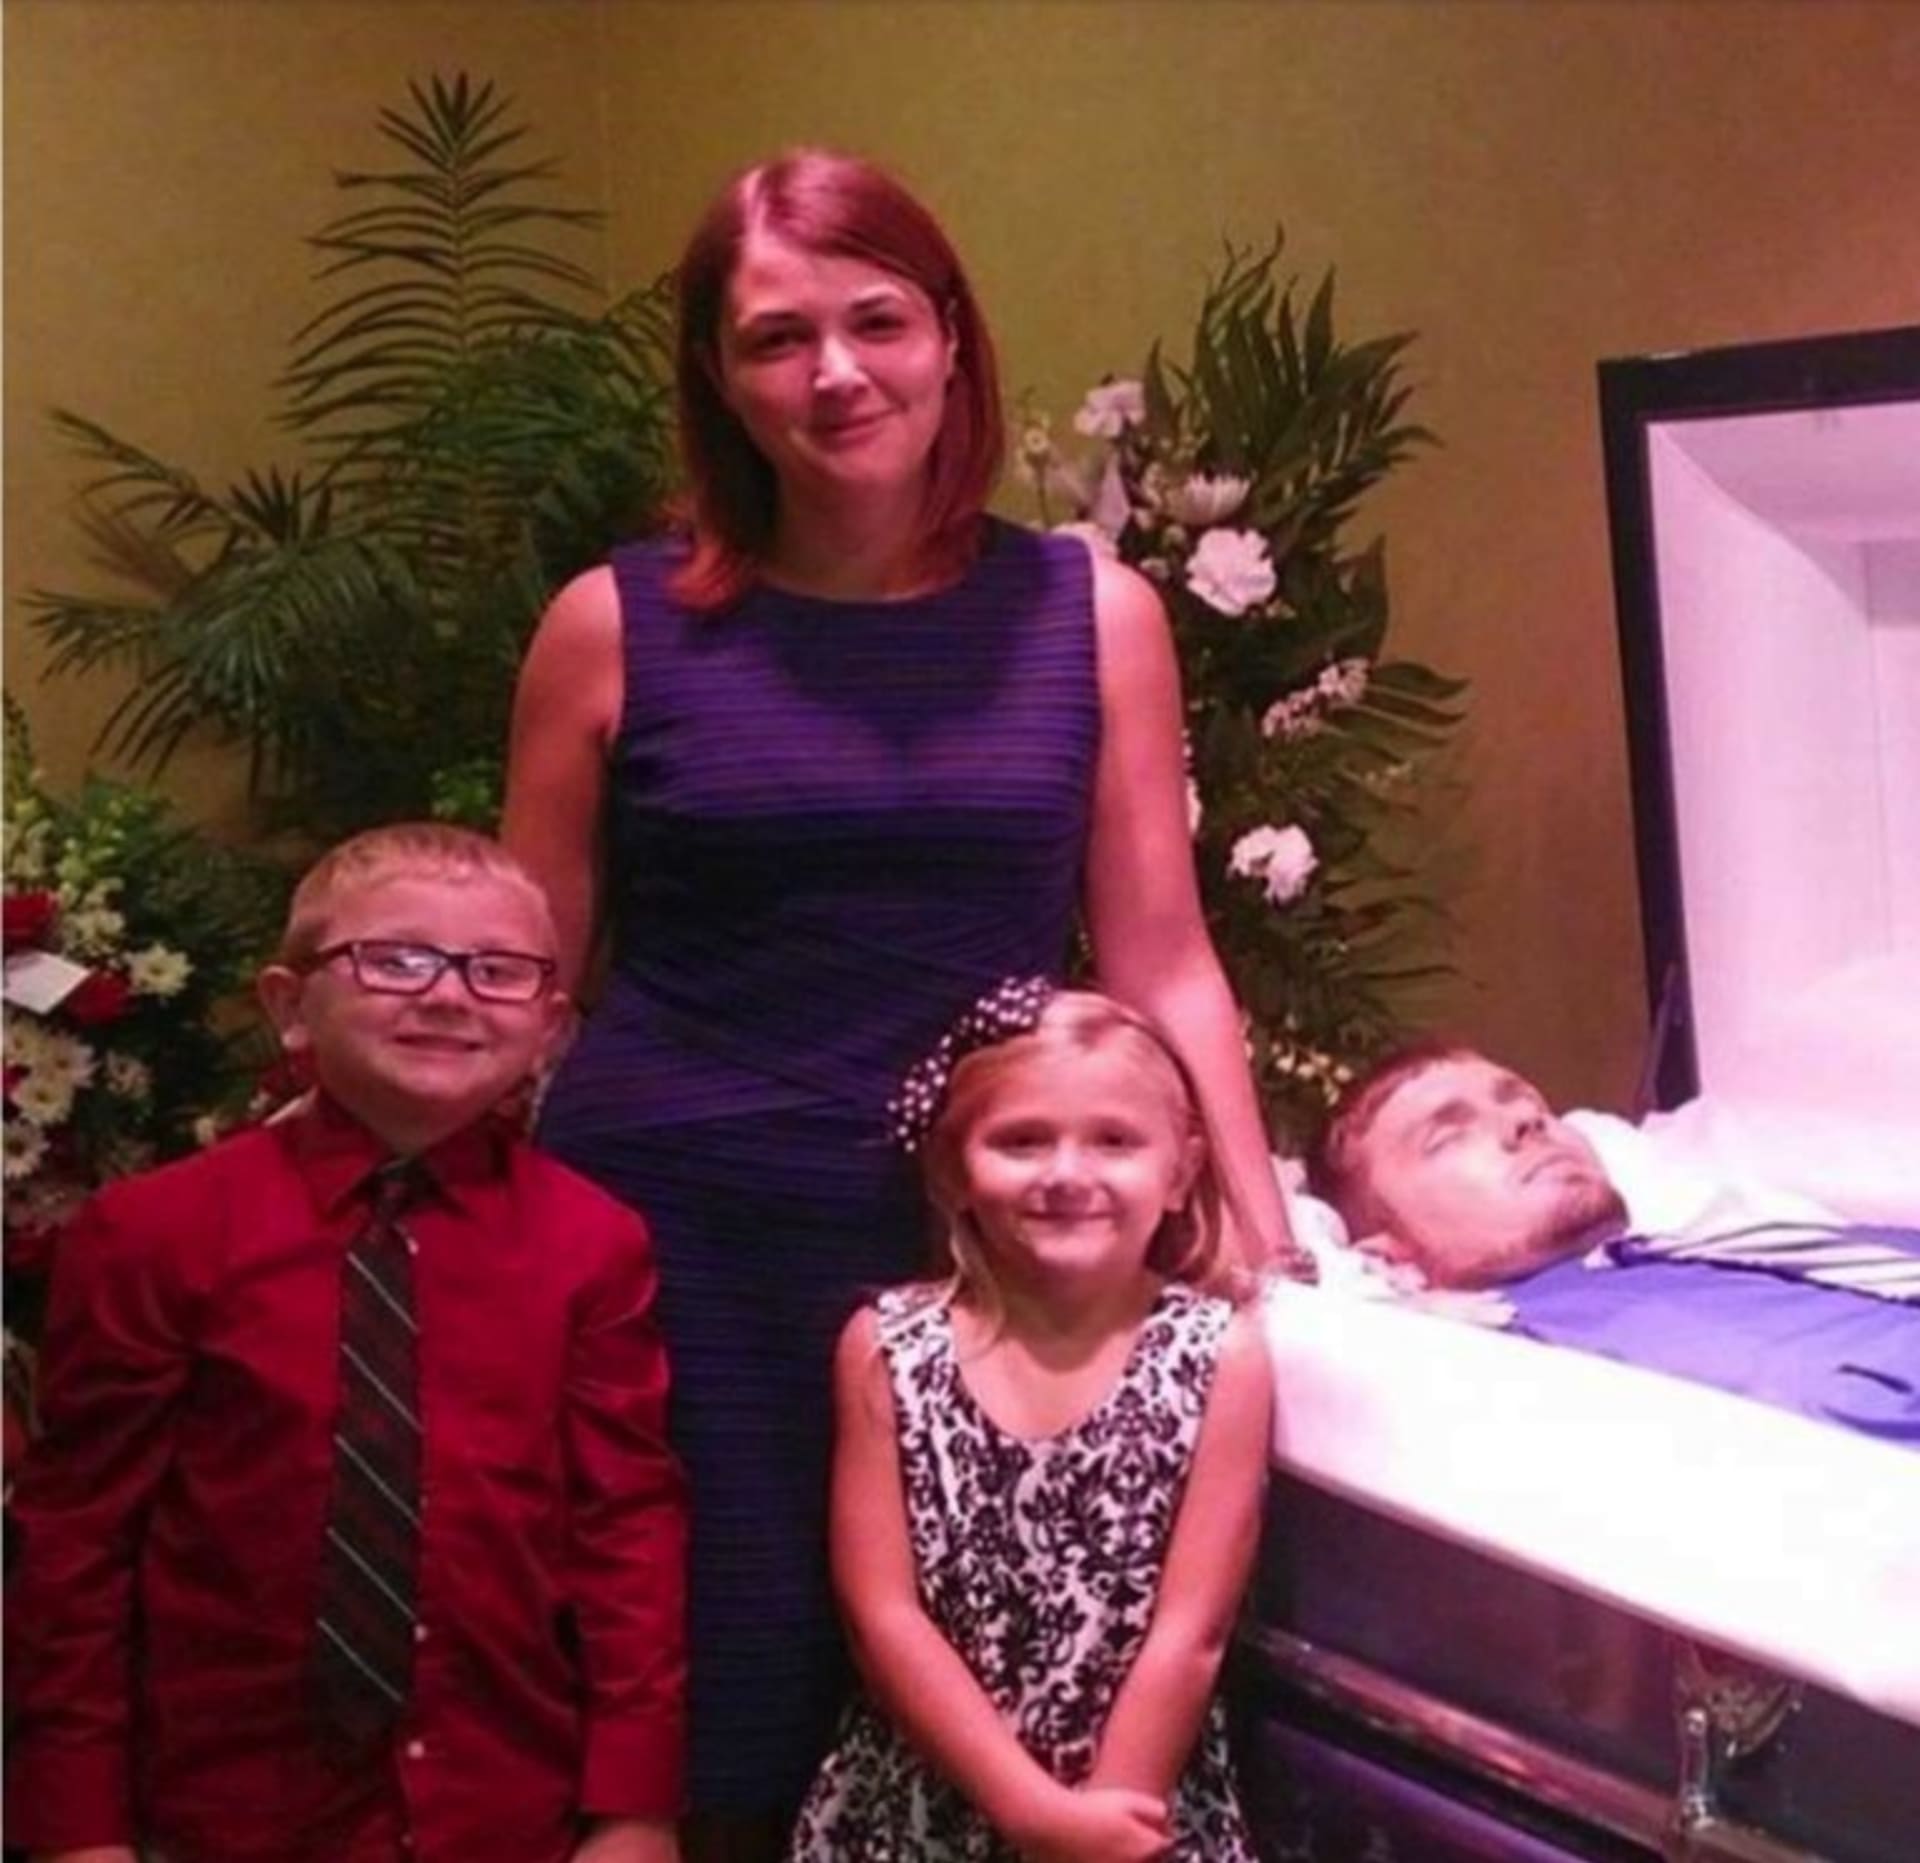 Fotka rodiny na pohřbu. 2